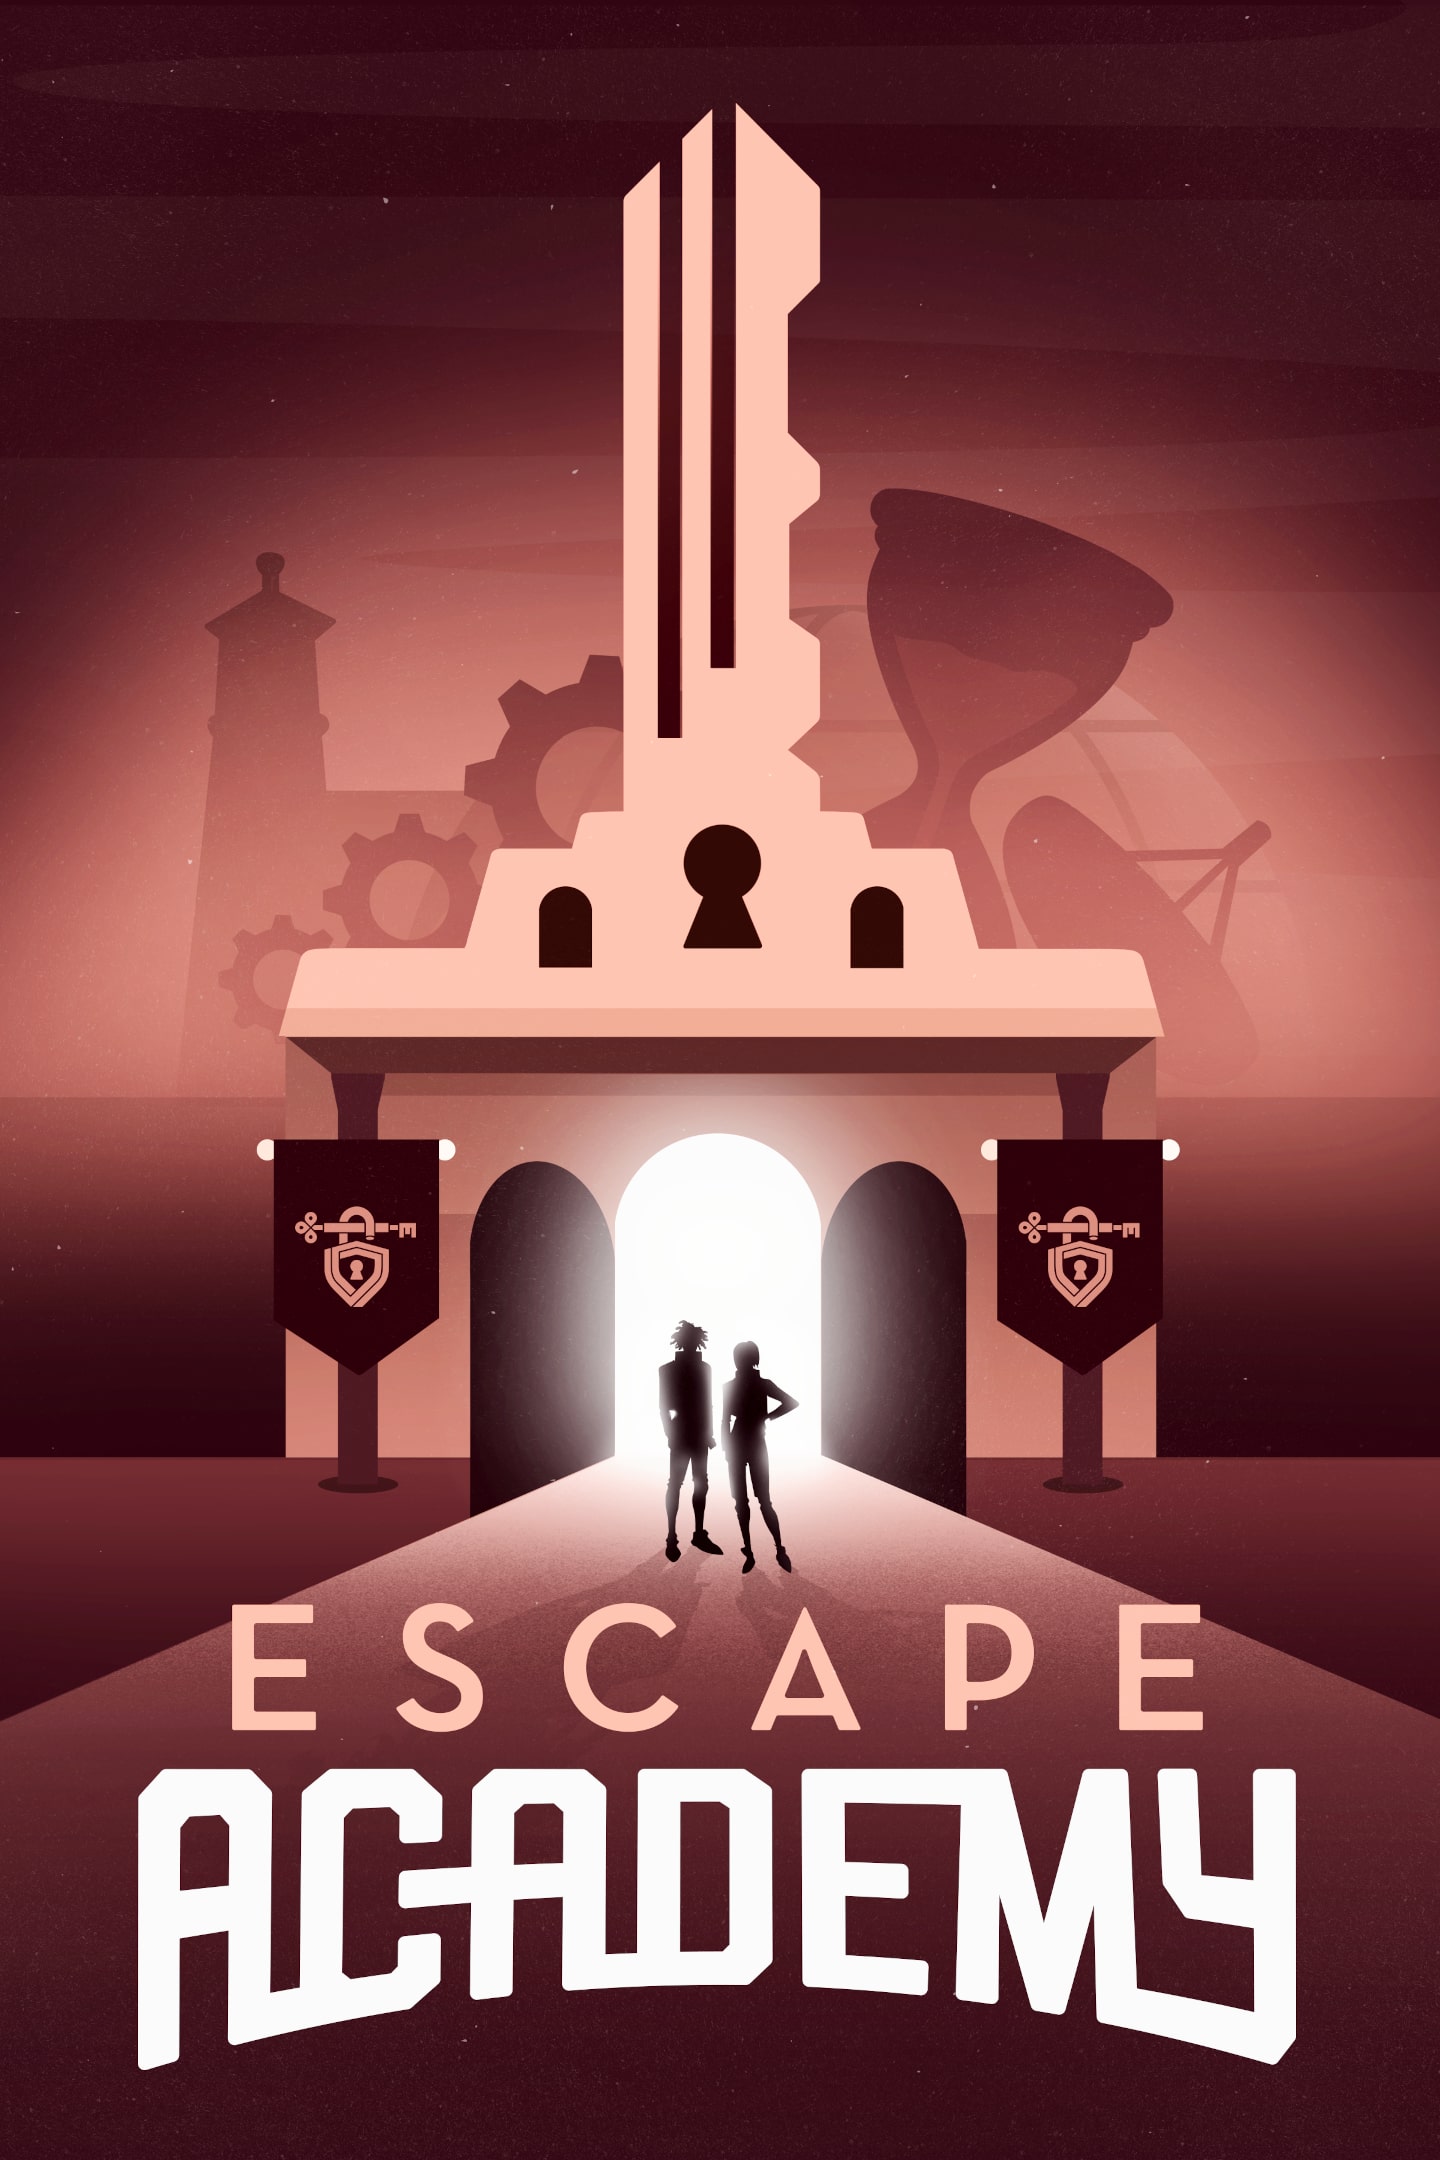 Escape Academy, jogo de fuga, é anunciado para PS4 e PS5